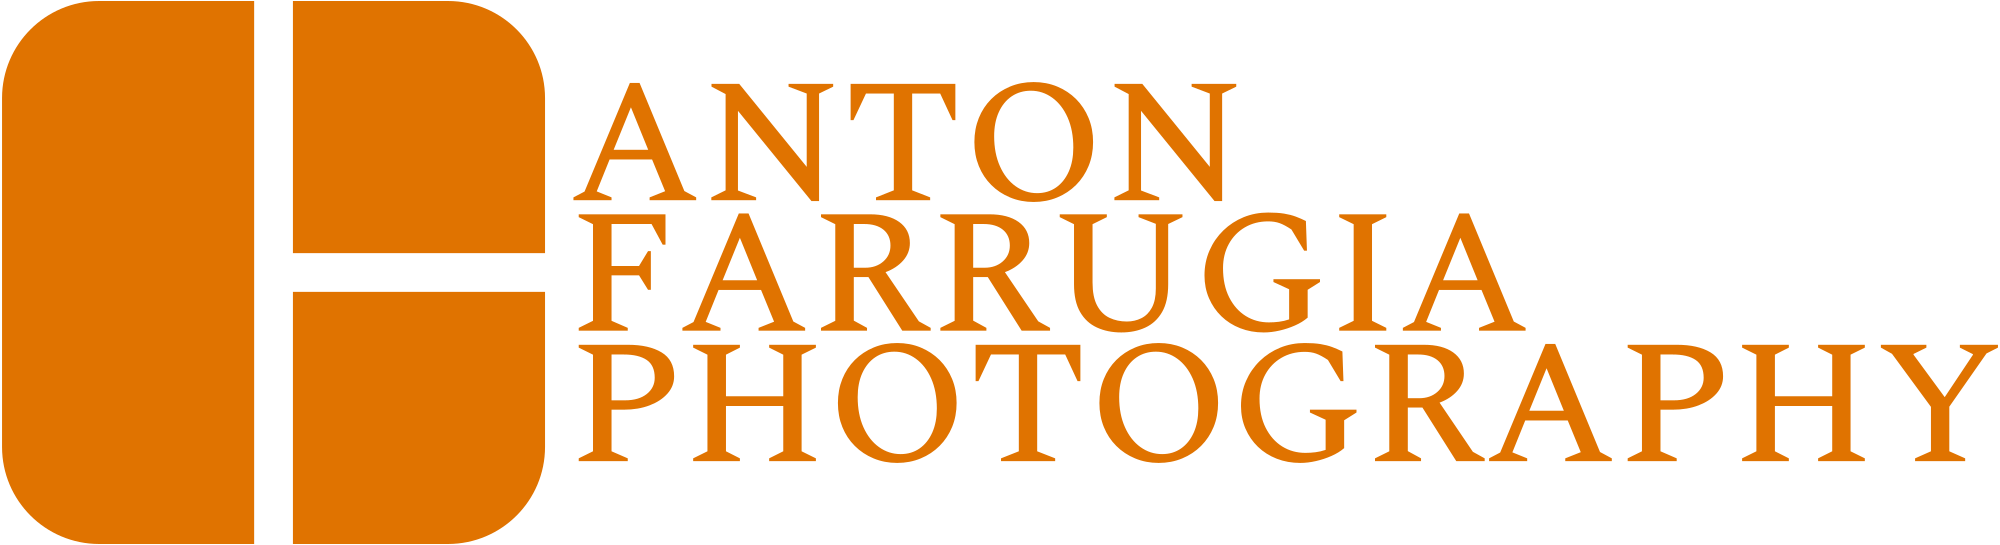 anton farrugia photography high resolution logo transparent